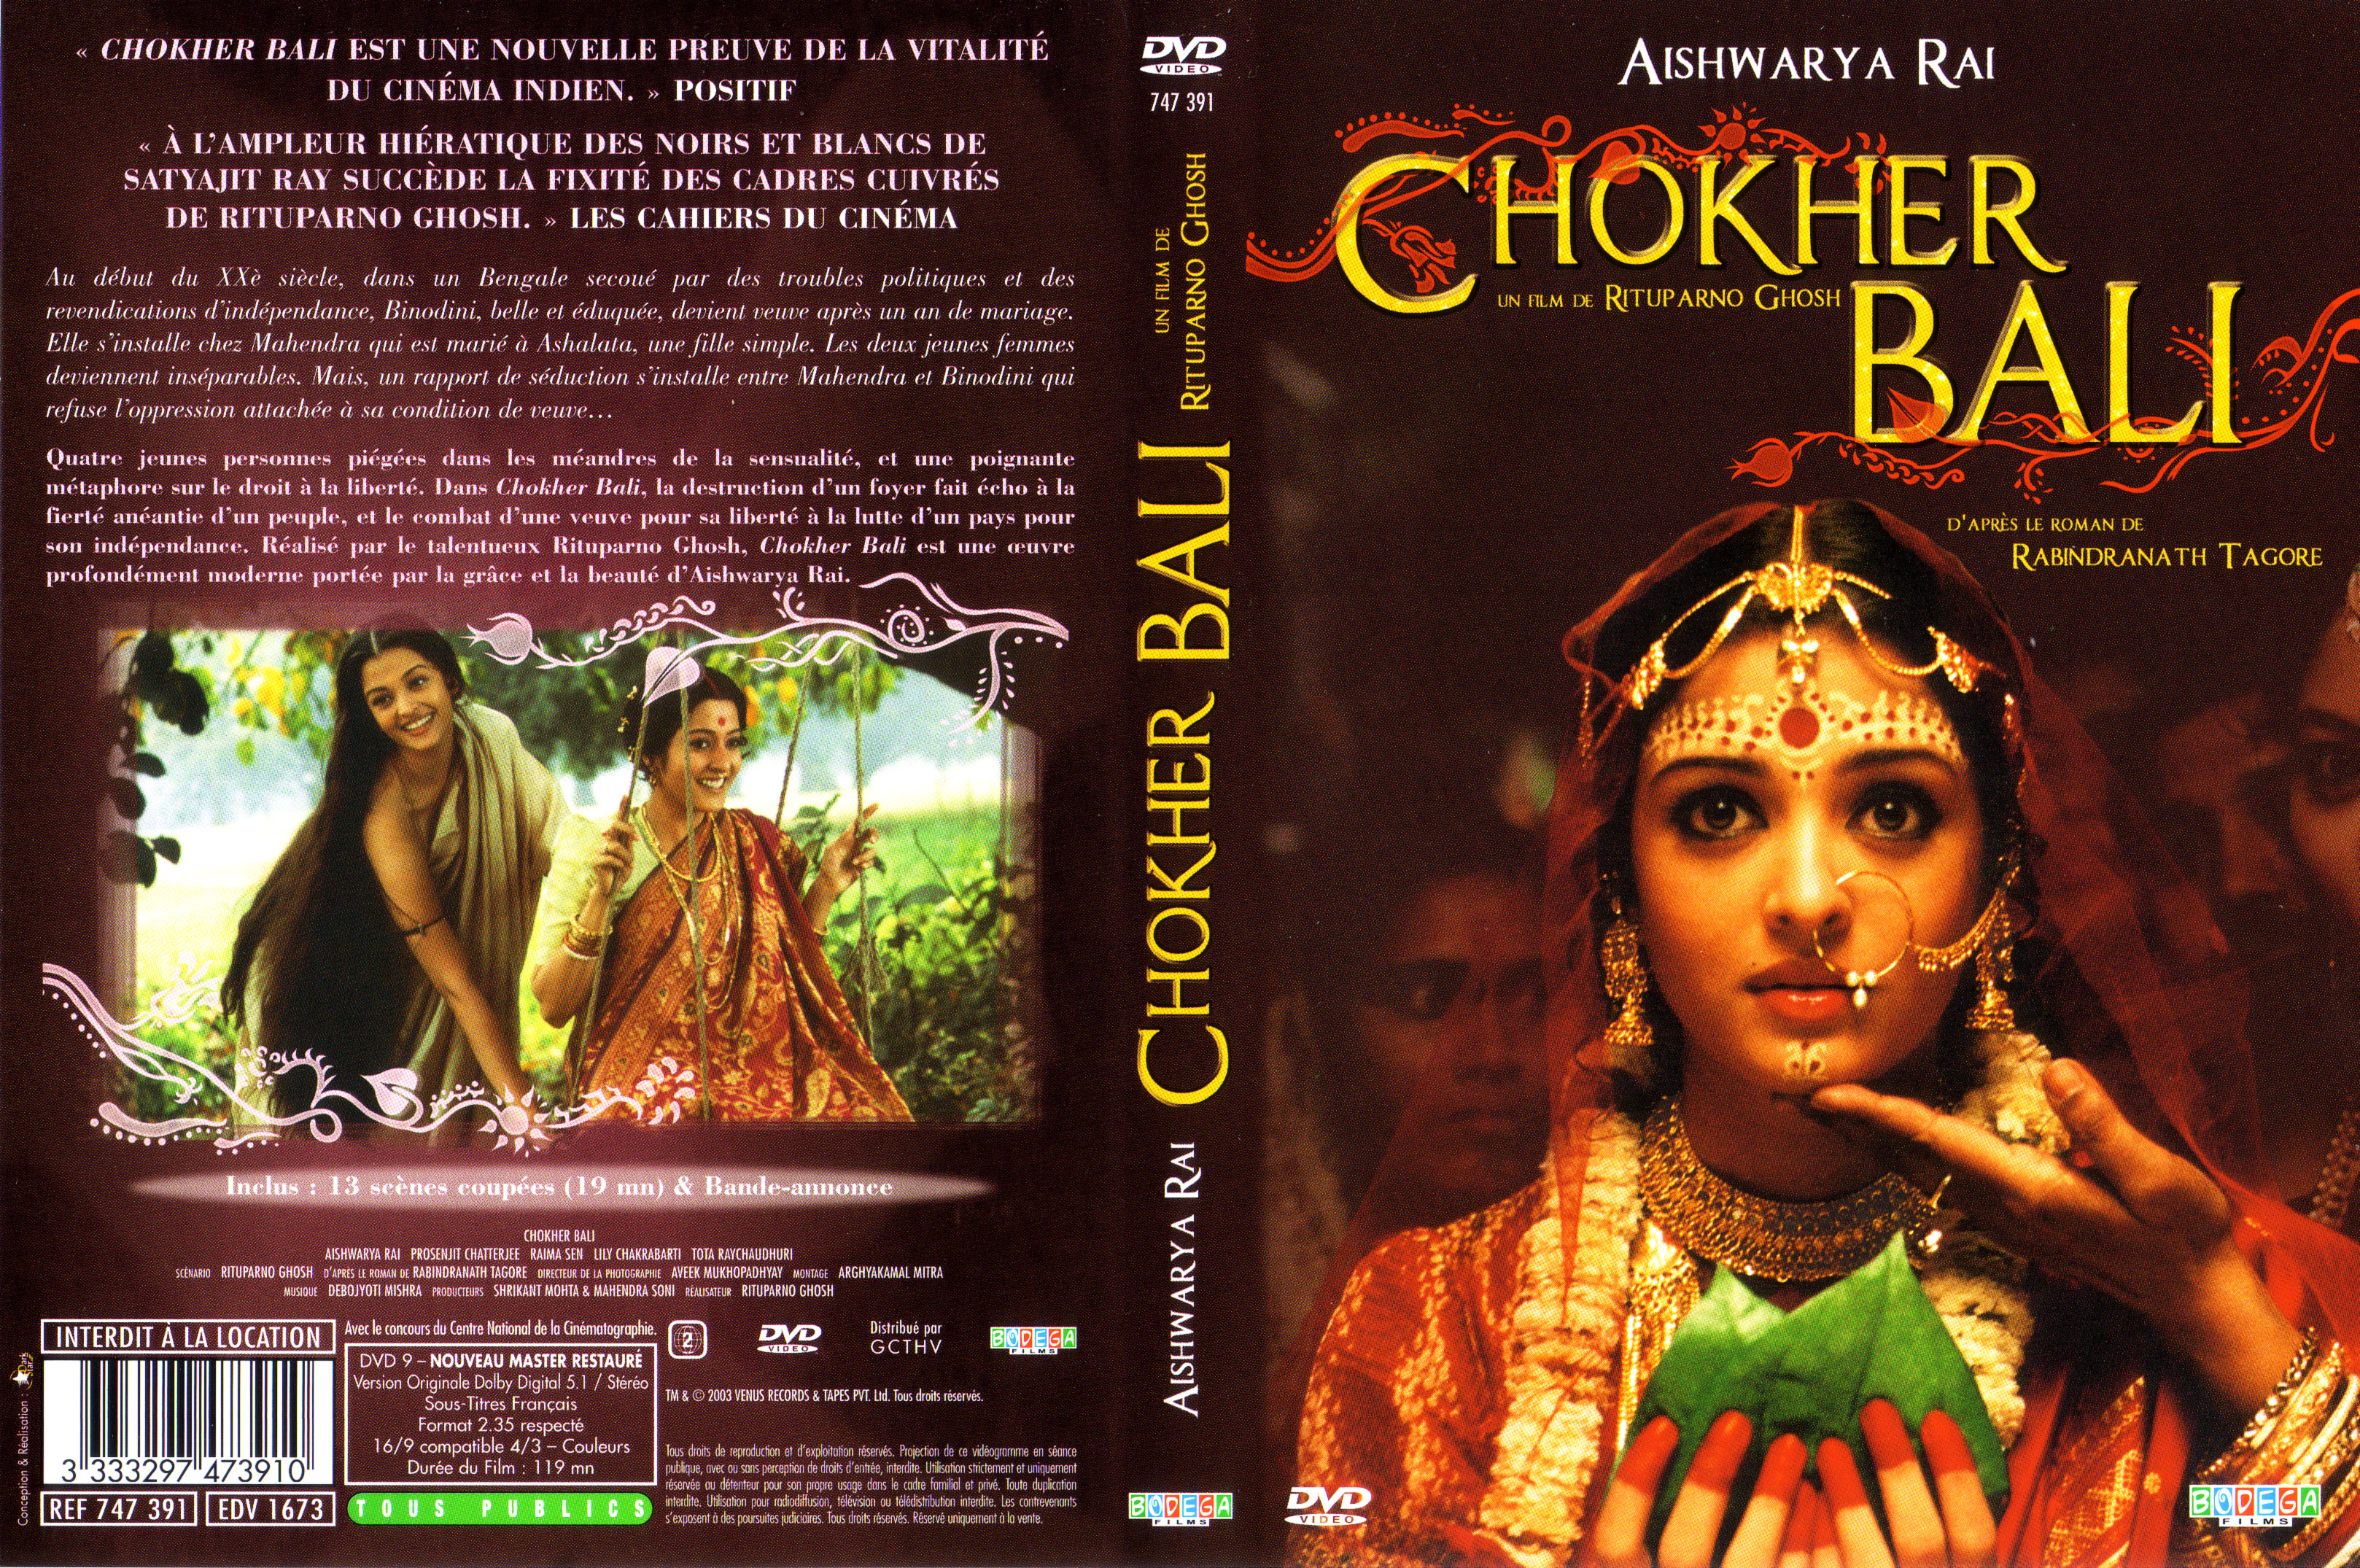 Jaquette DVD Chokher Bali